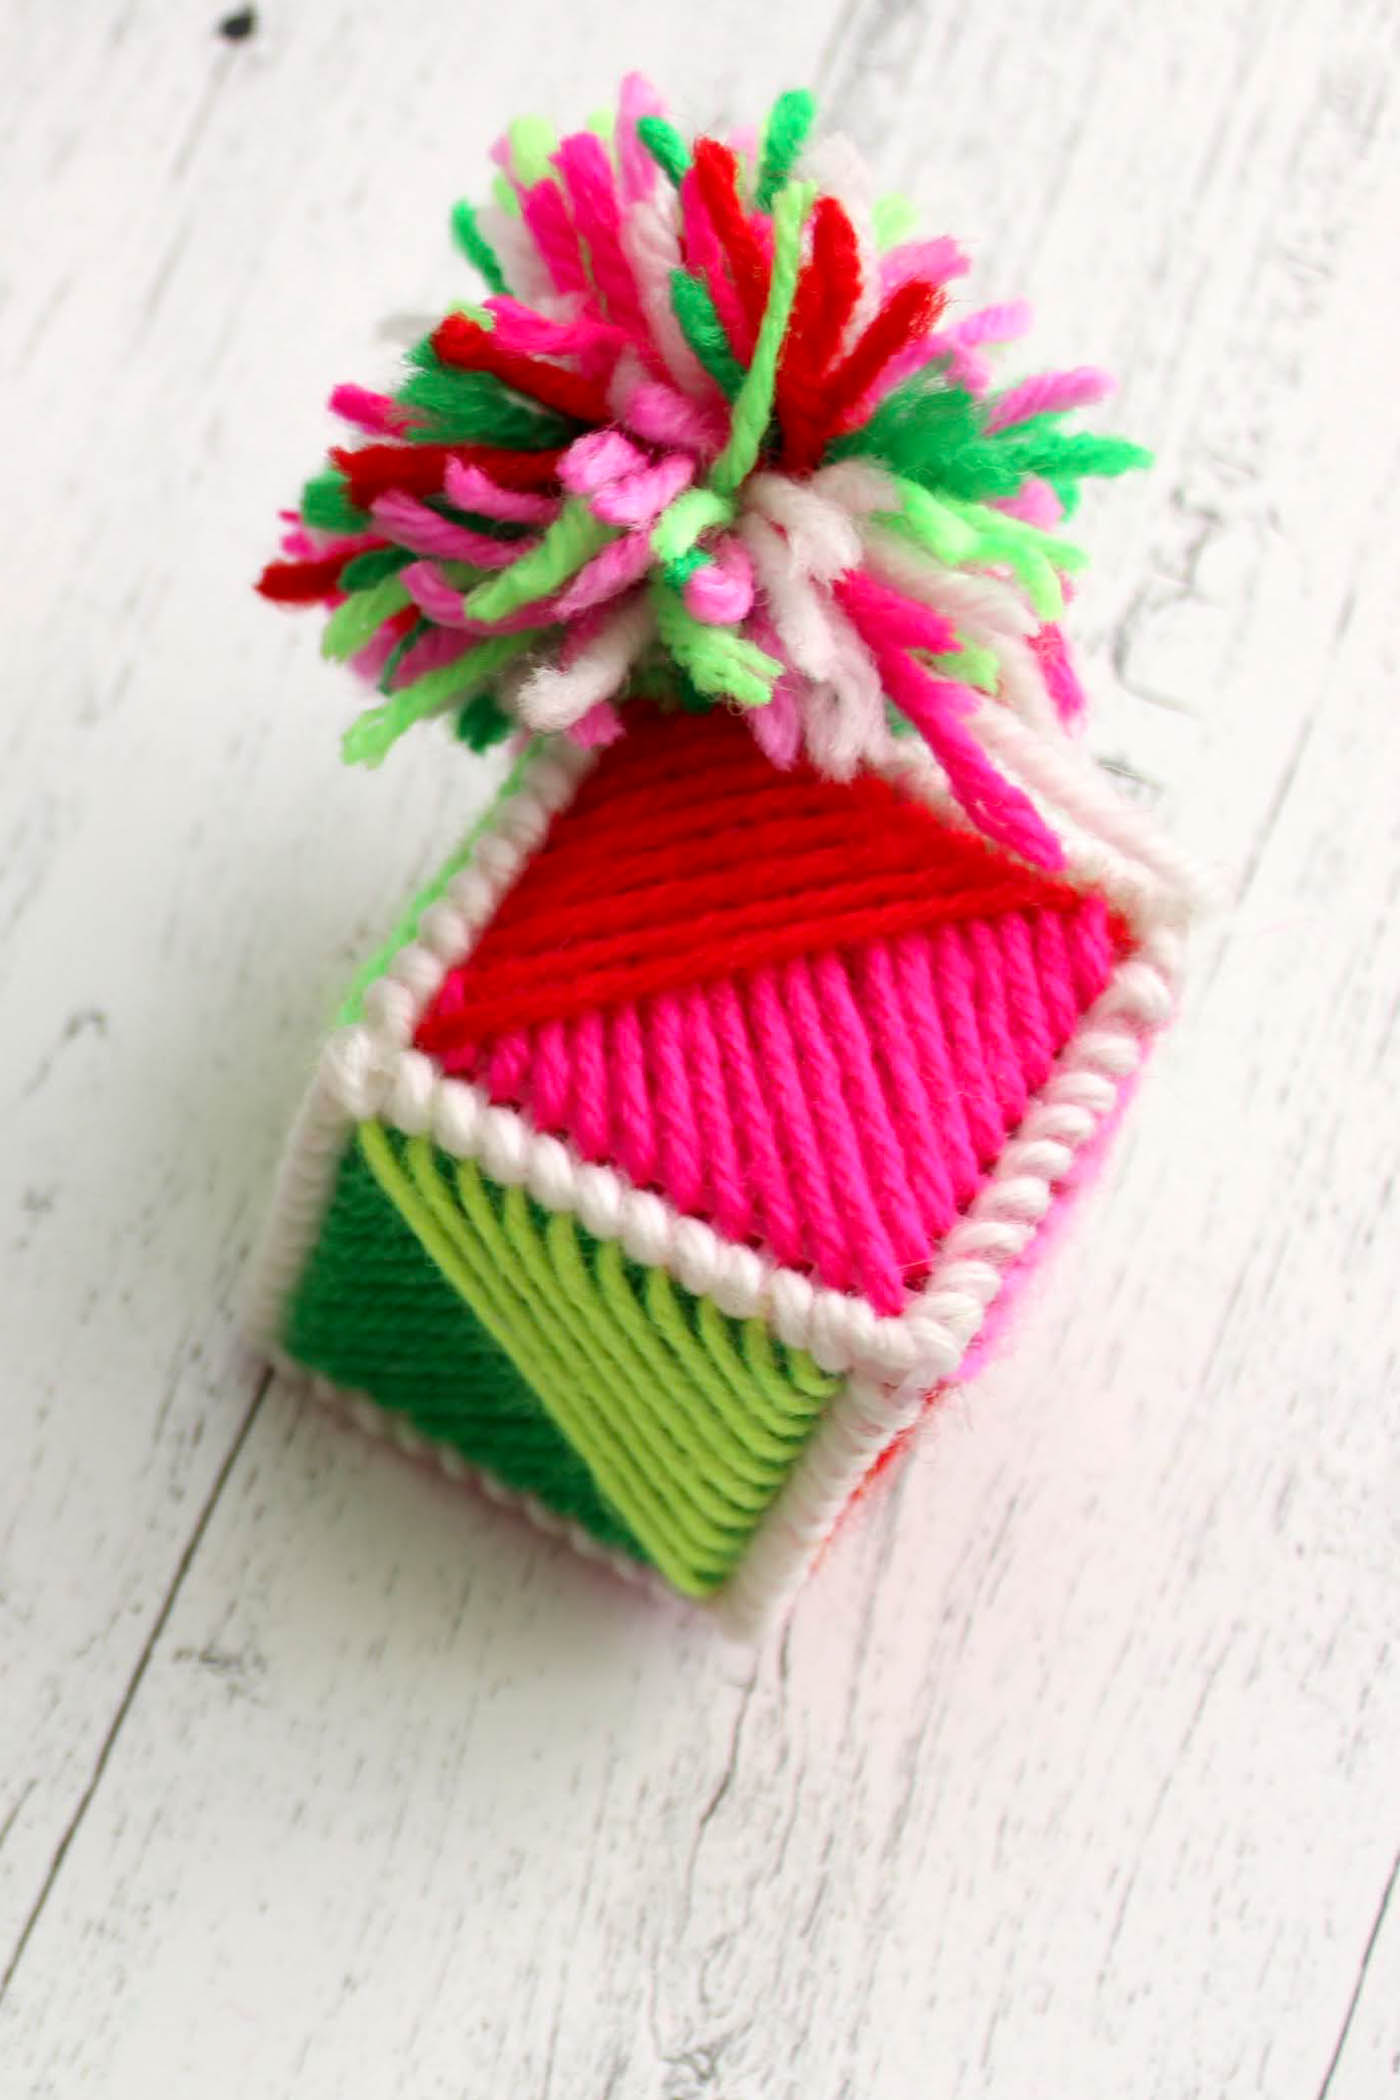 Yarn Stitched Jingle Ball Ornament Tutorial